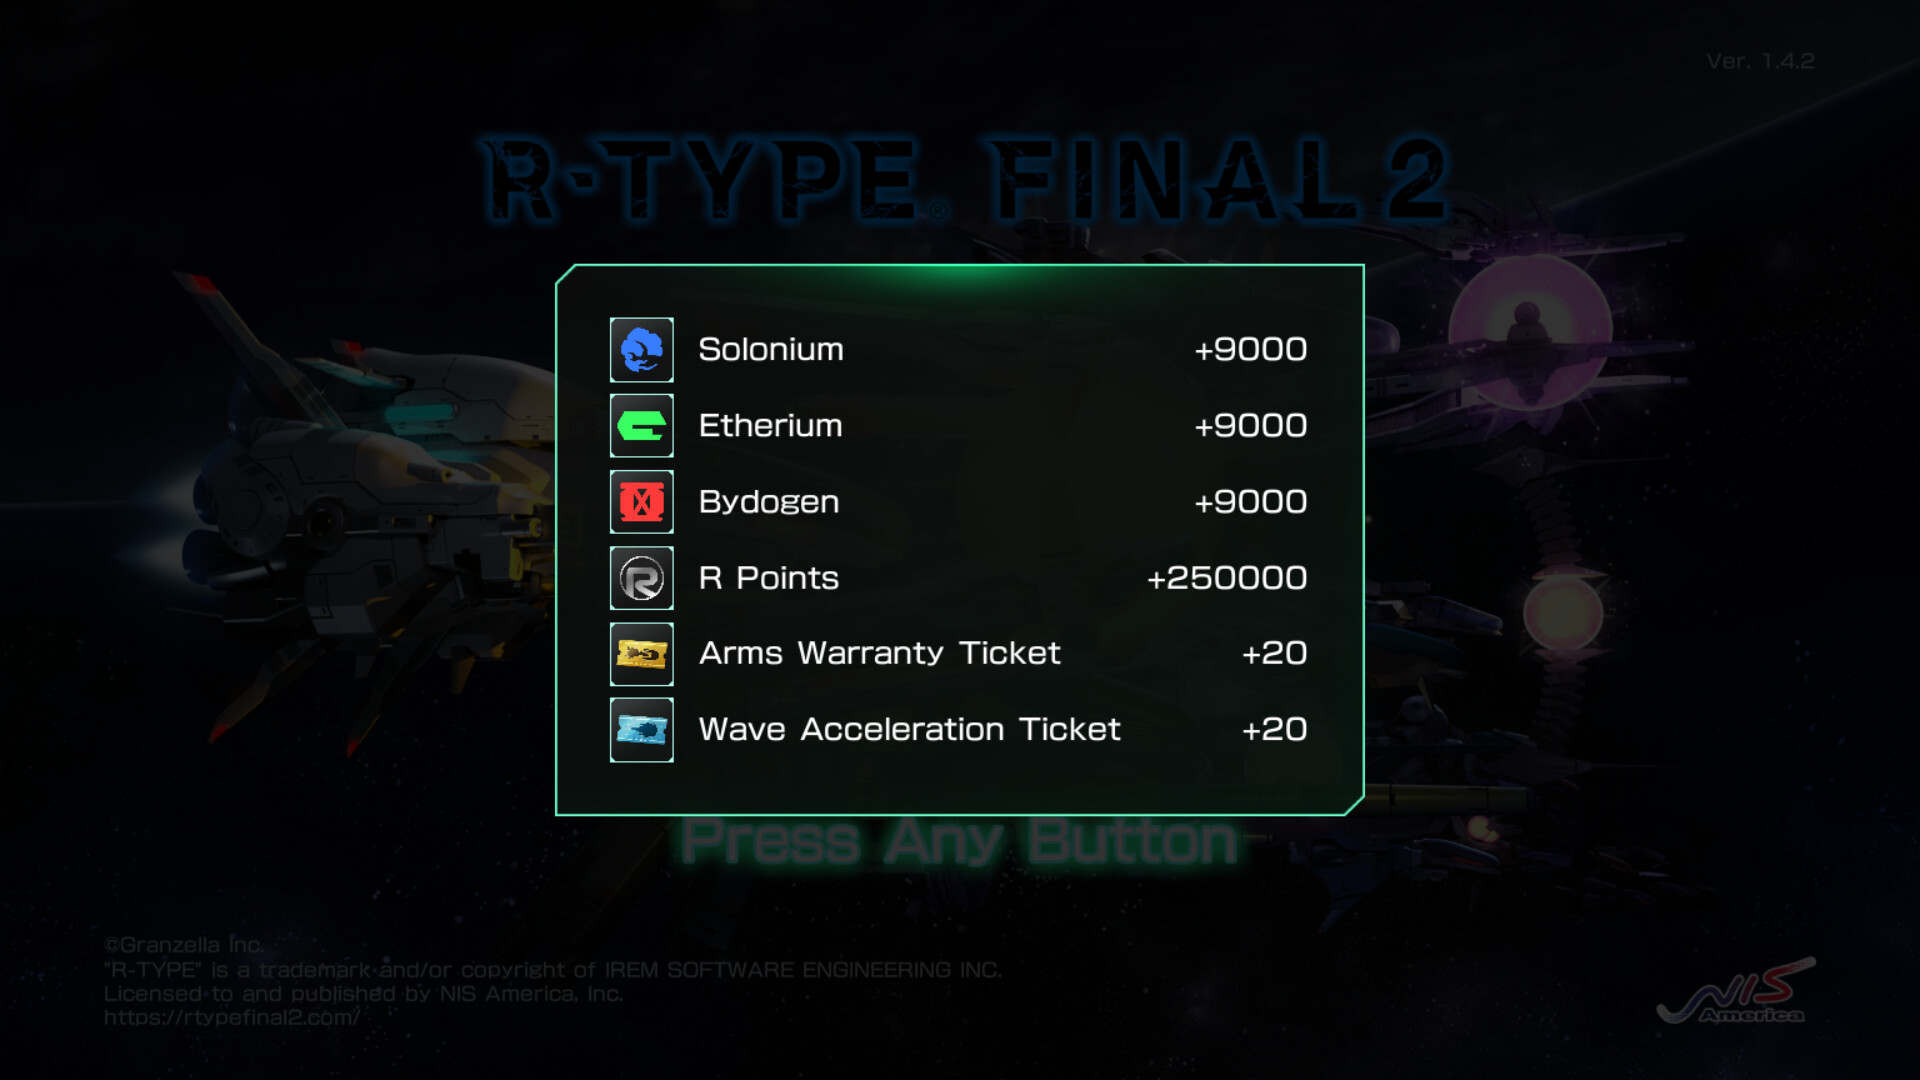 R-Type Final 2 - Ace Pilot Special Training Pack III DLC Steam CD Key, $5.64